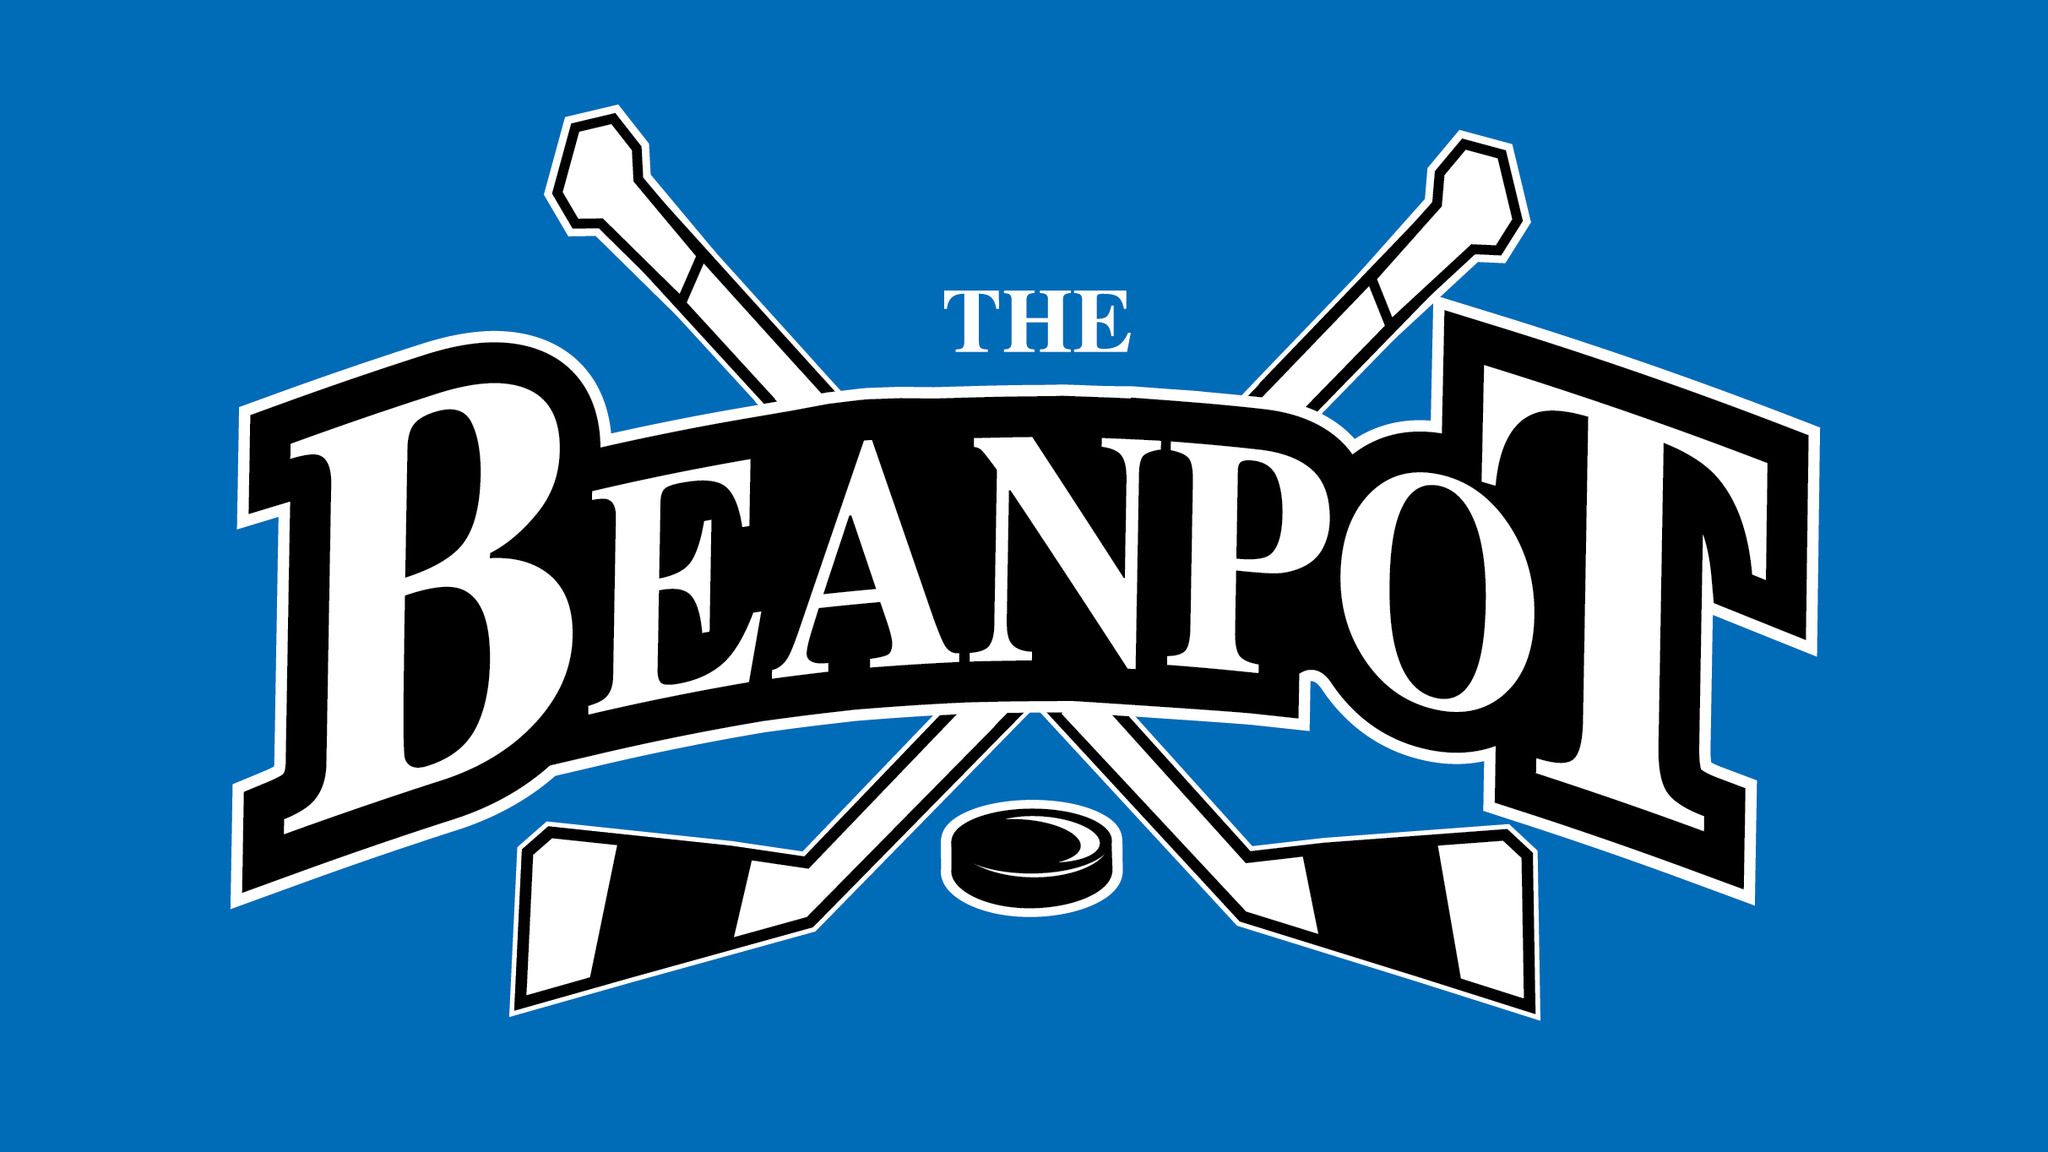 Boston Beanpot Tournament Tickets Single Game Tickets & Schedule